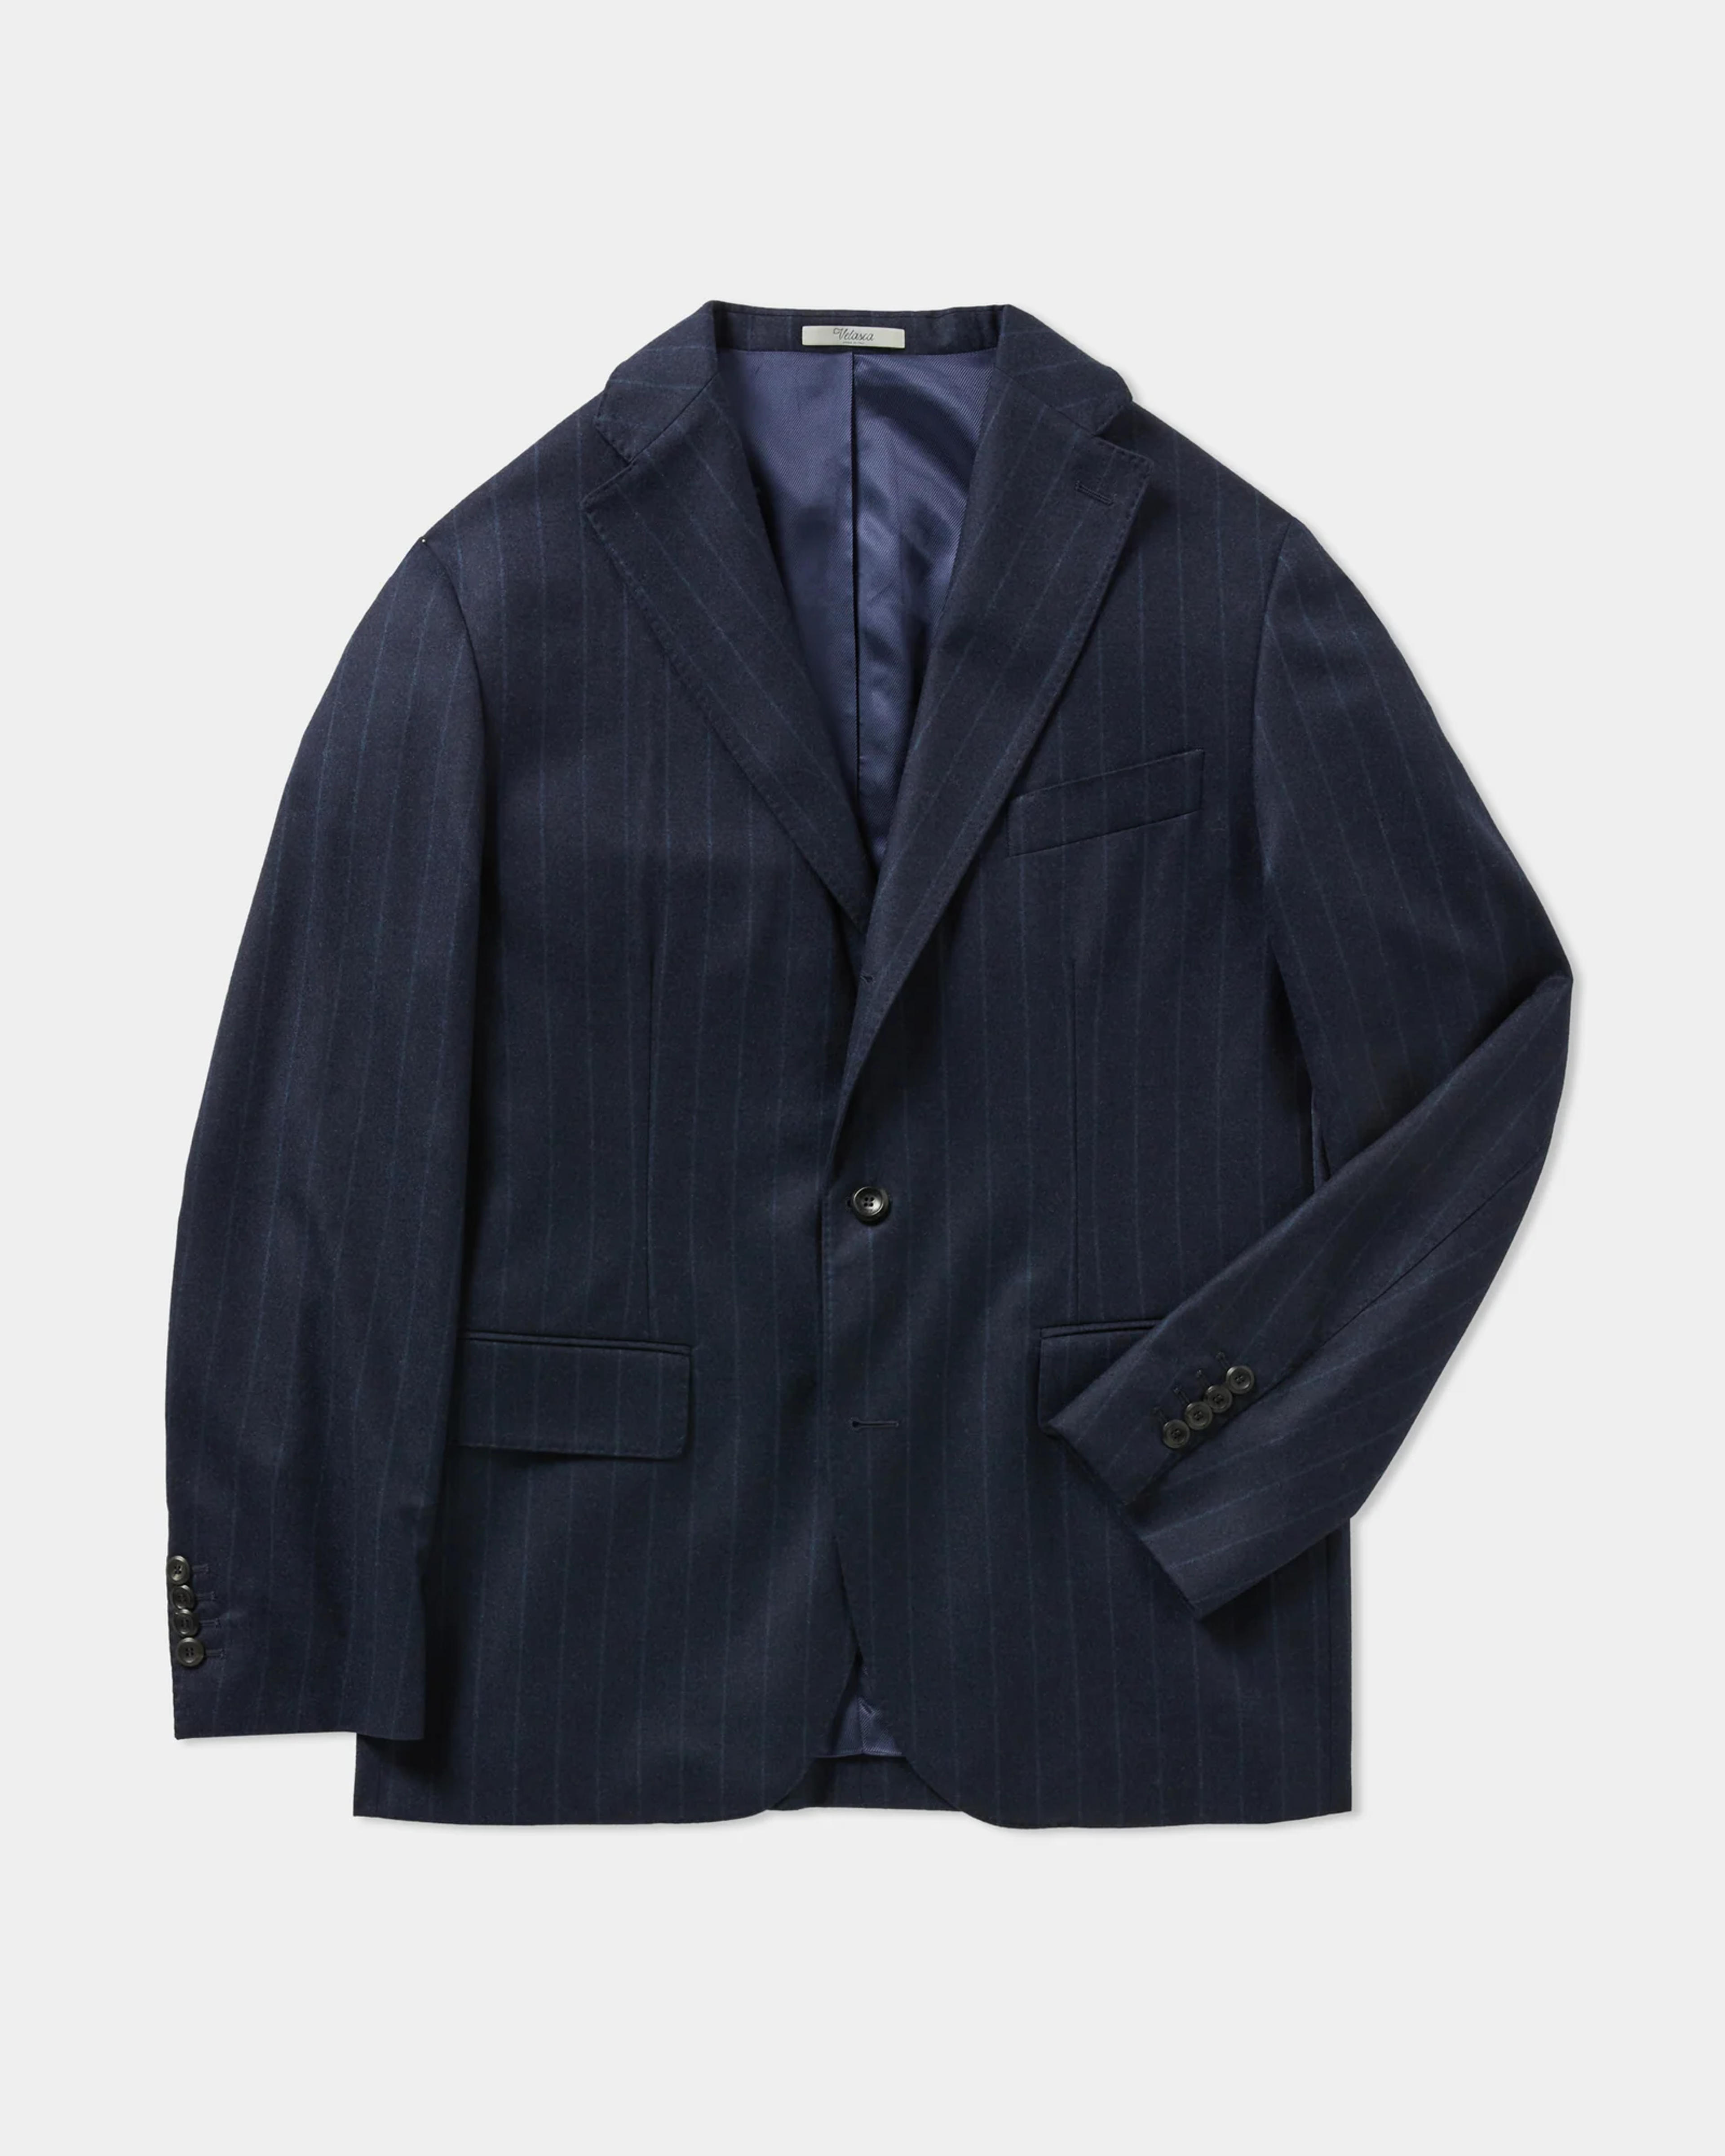 Velasca | Navy blue chalk stripe flannel blazer, Made in Italy